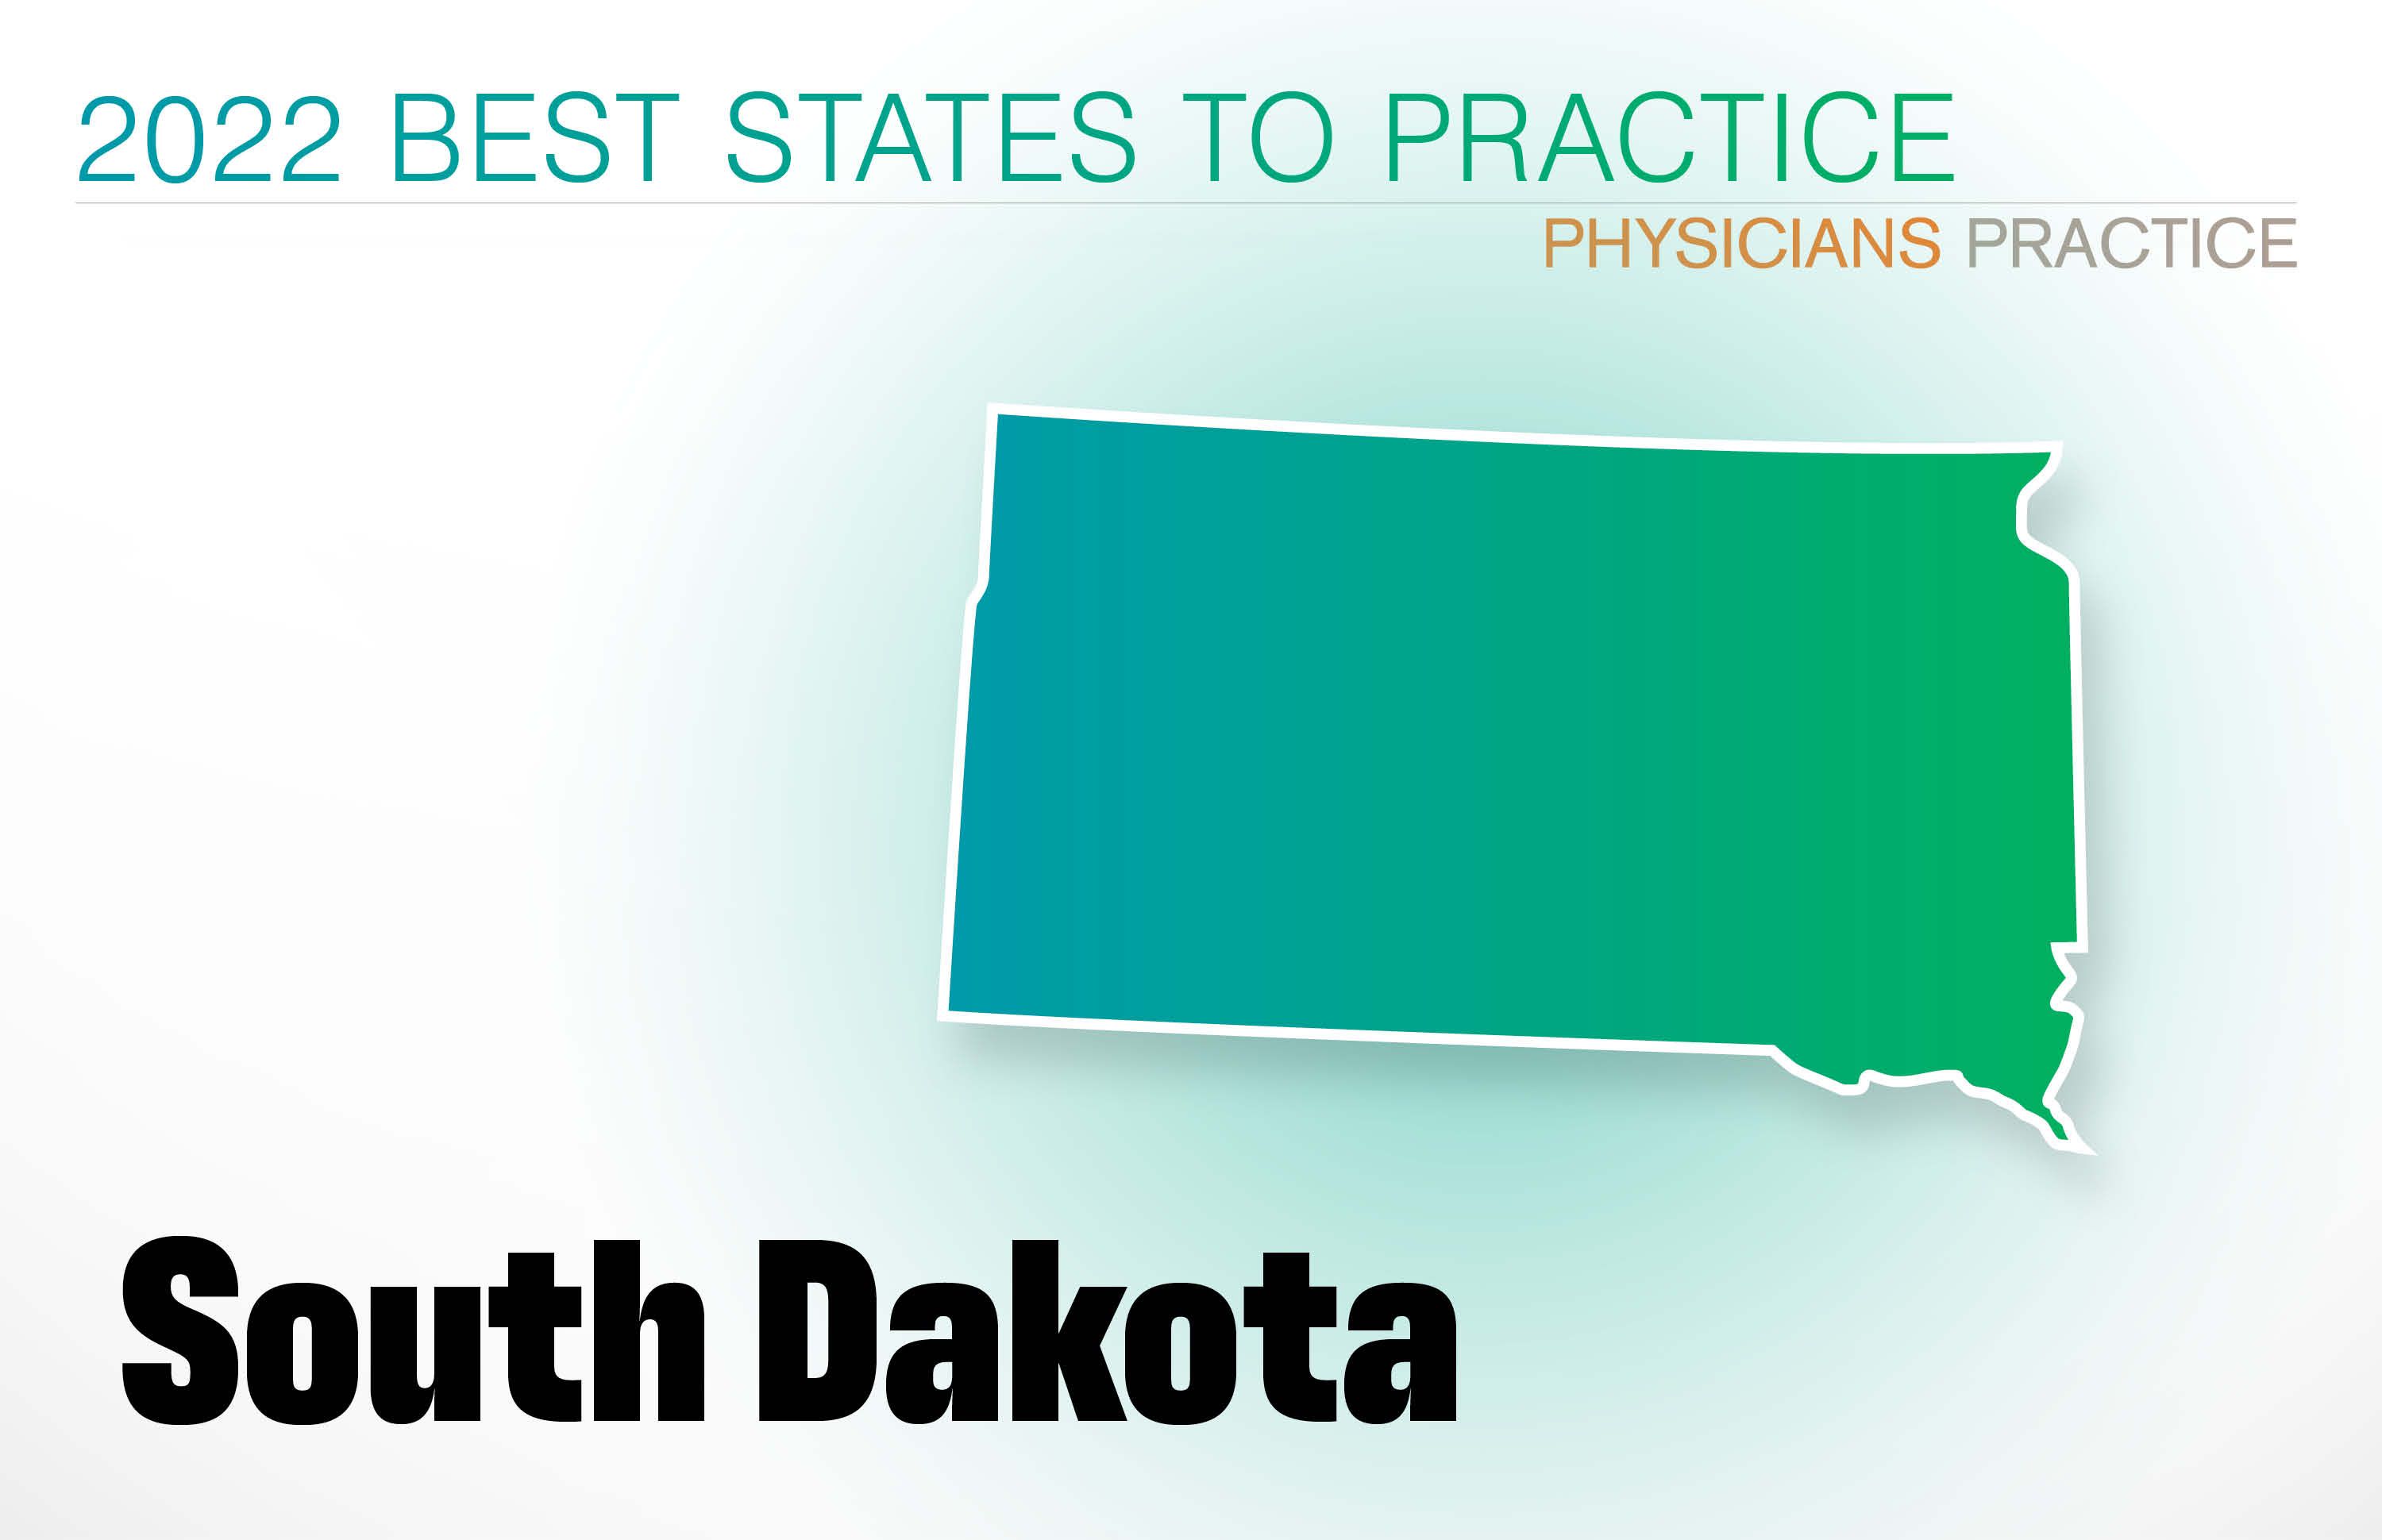 #3 South Dakota